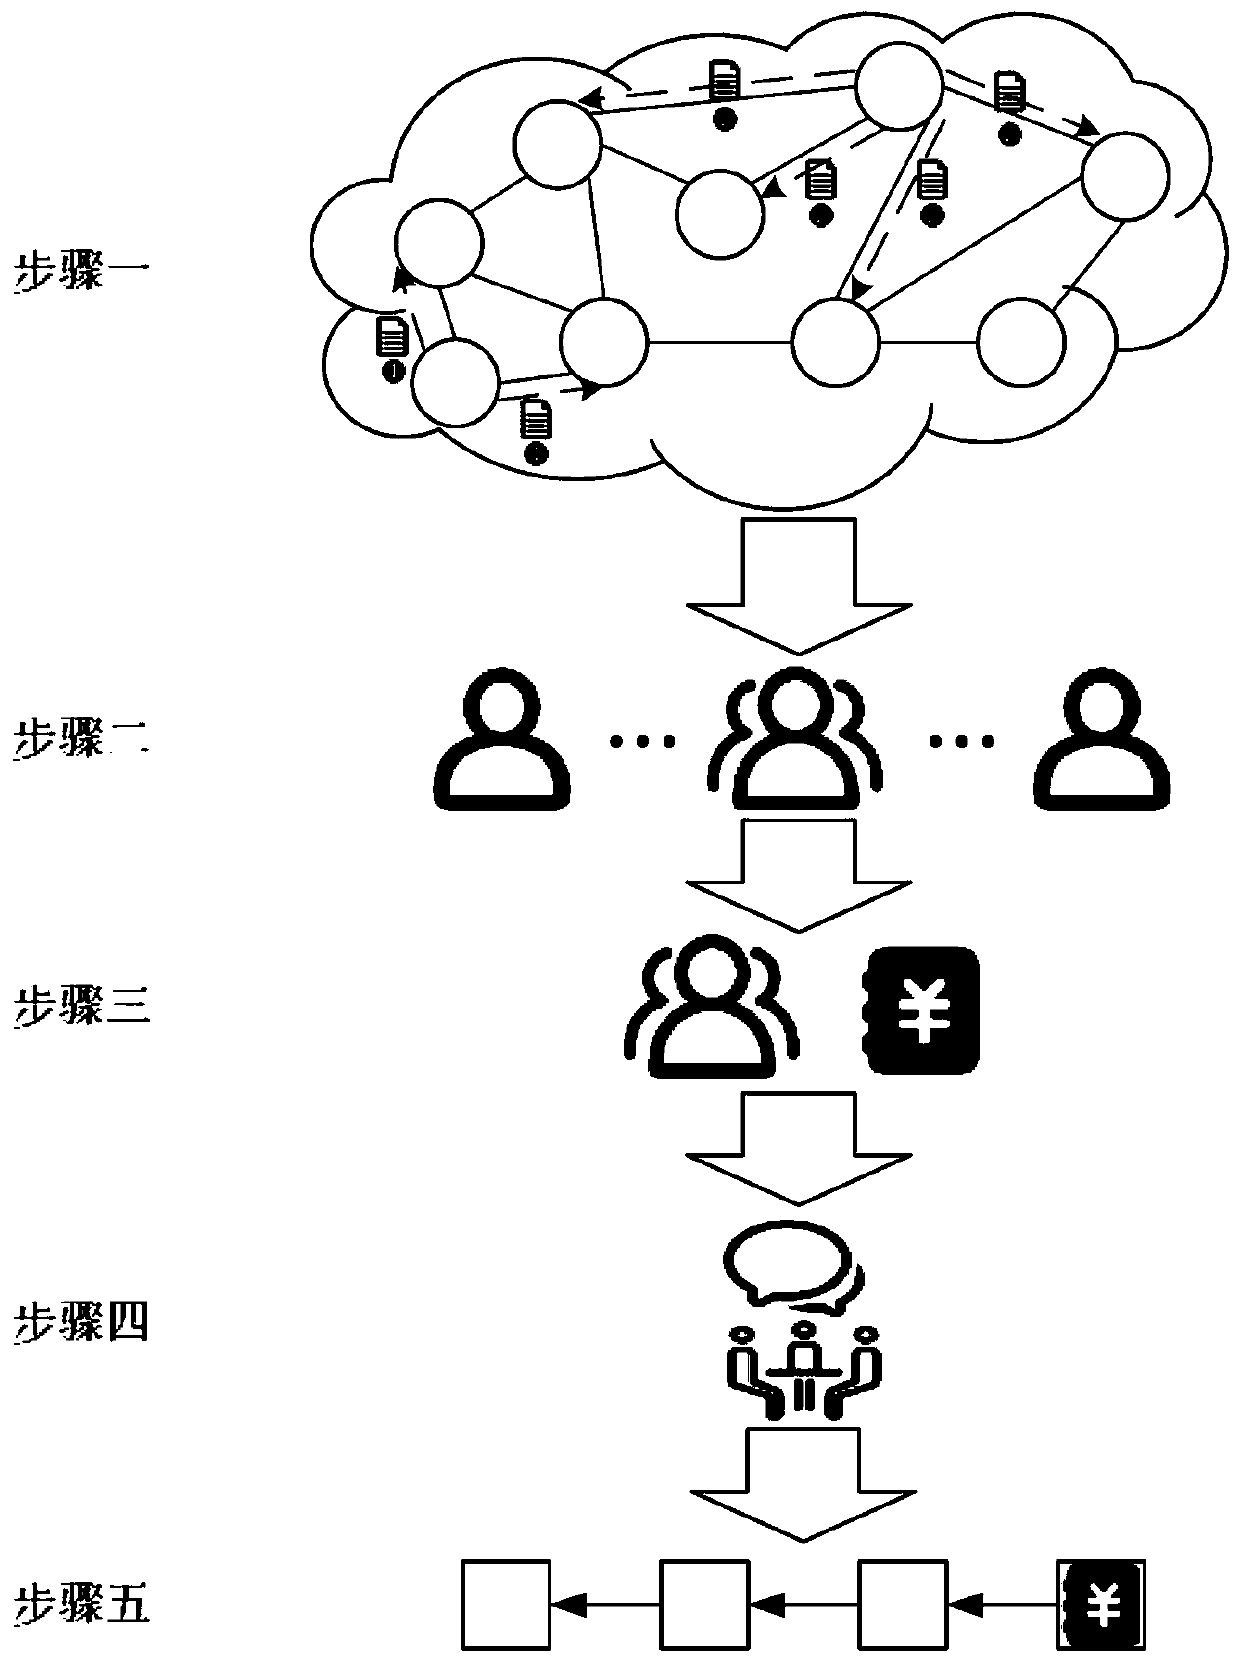 Multi-block output public chain consensus mechanism based on H-Algand